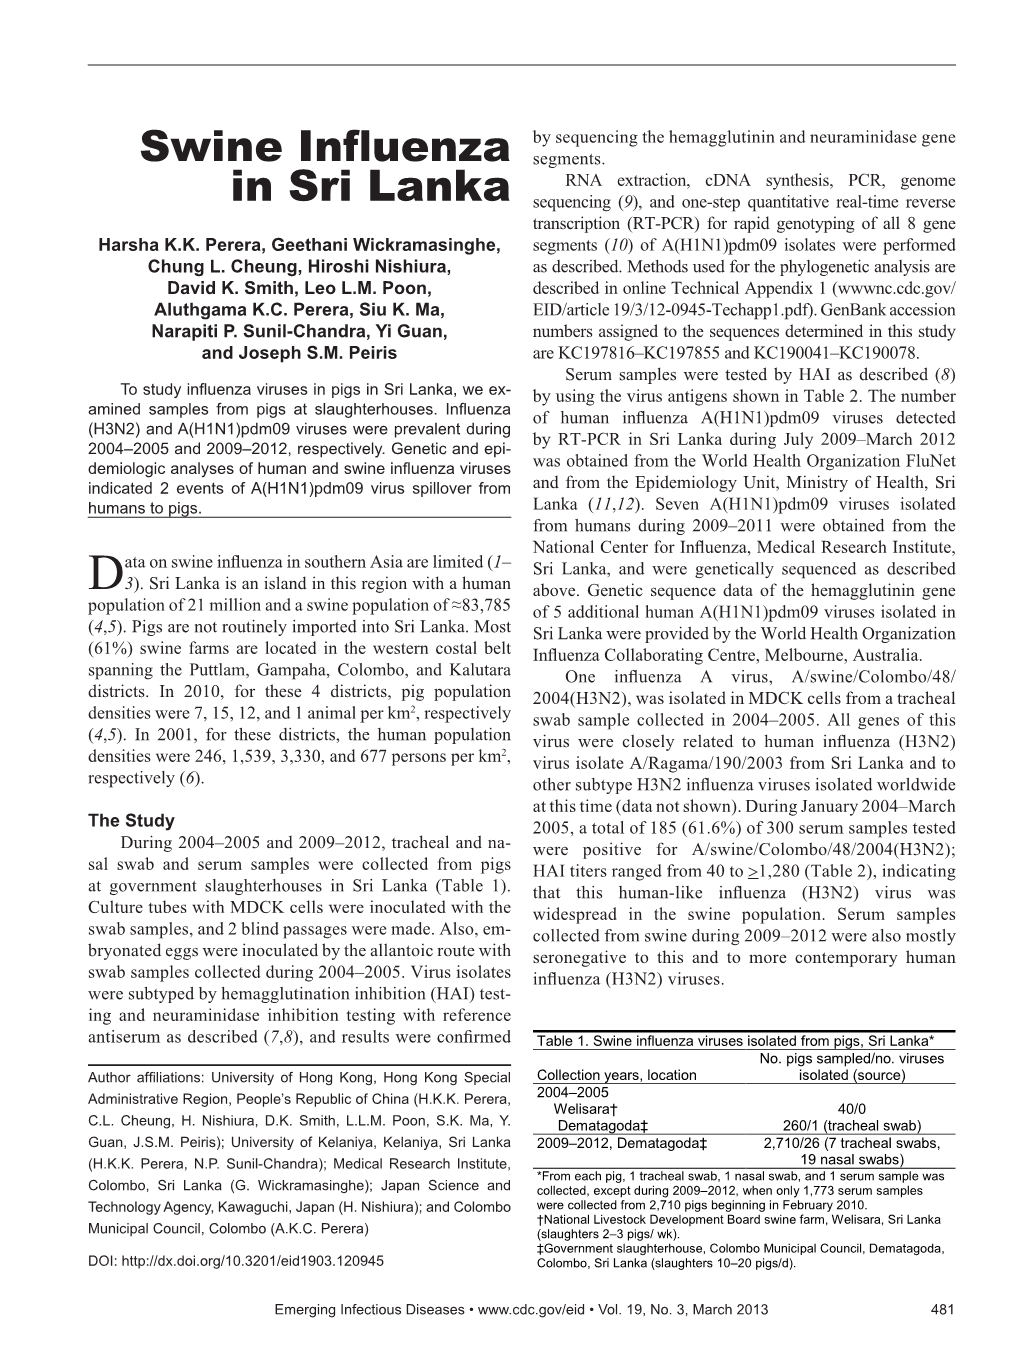 Swine Influenza in Sri Lanka